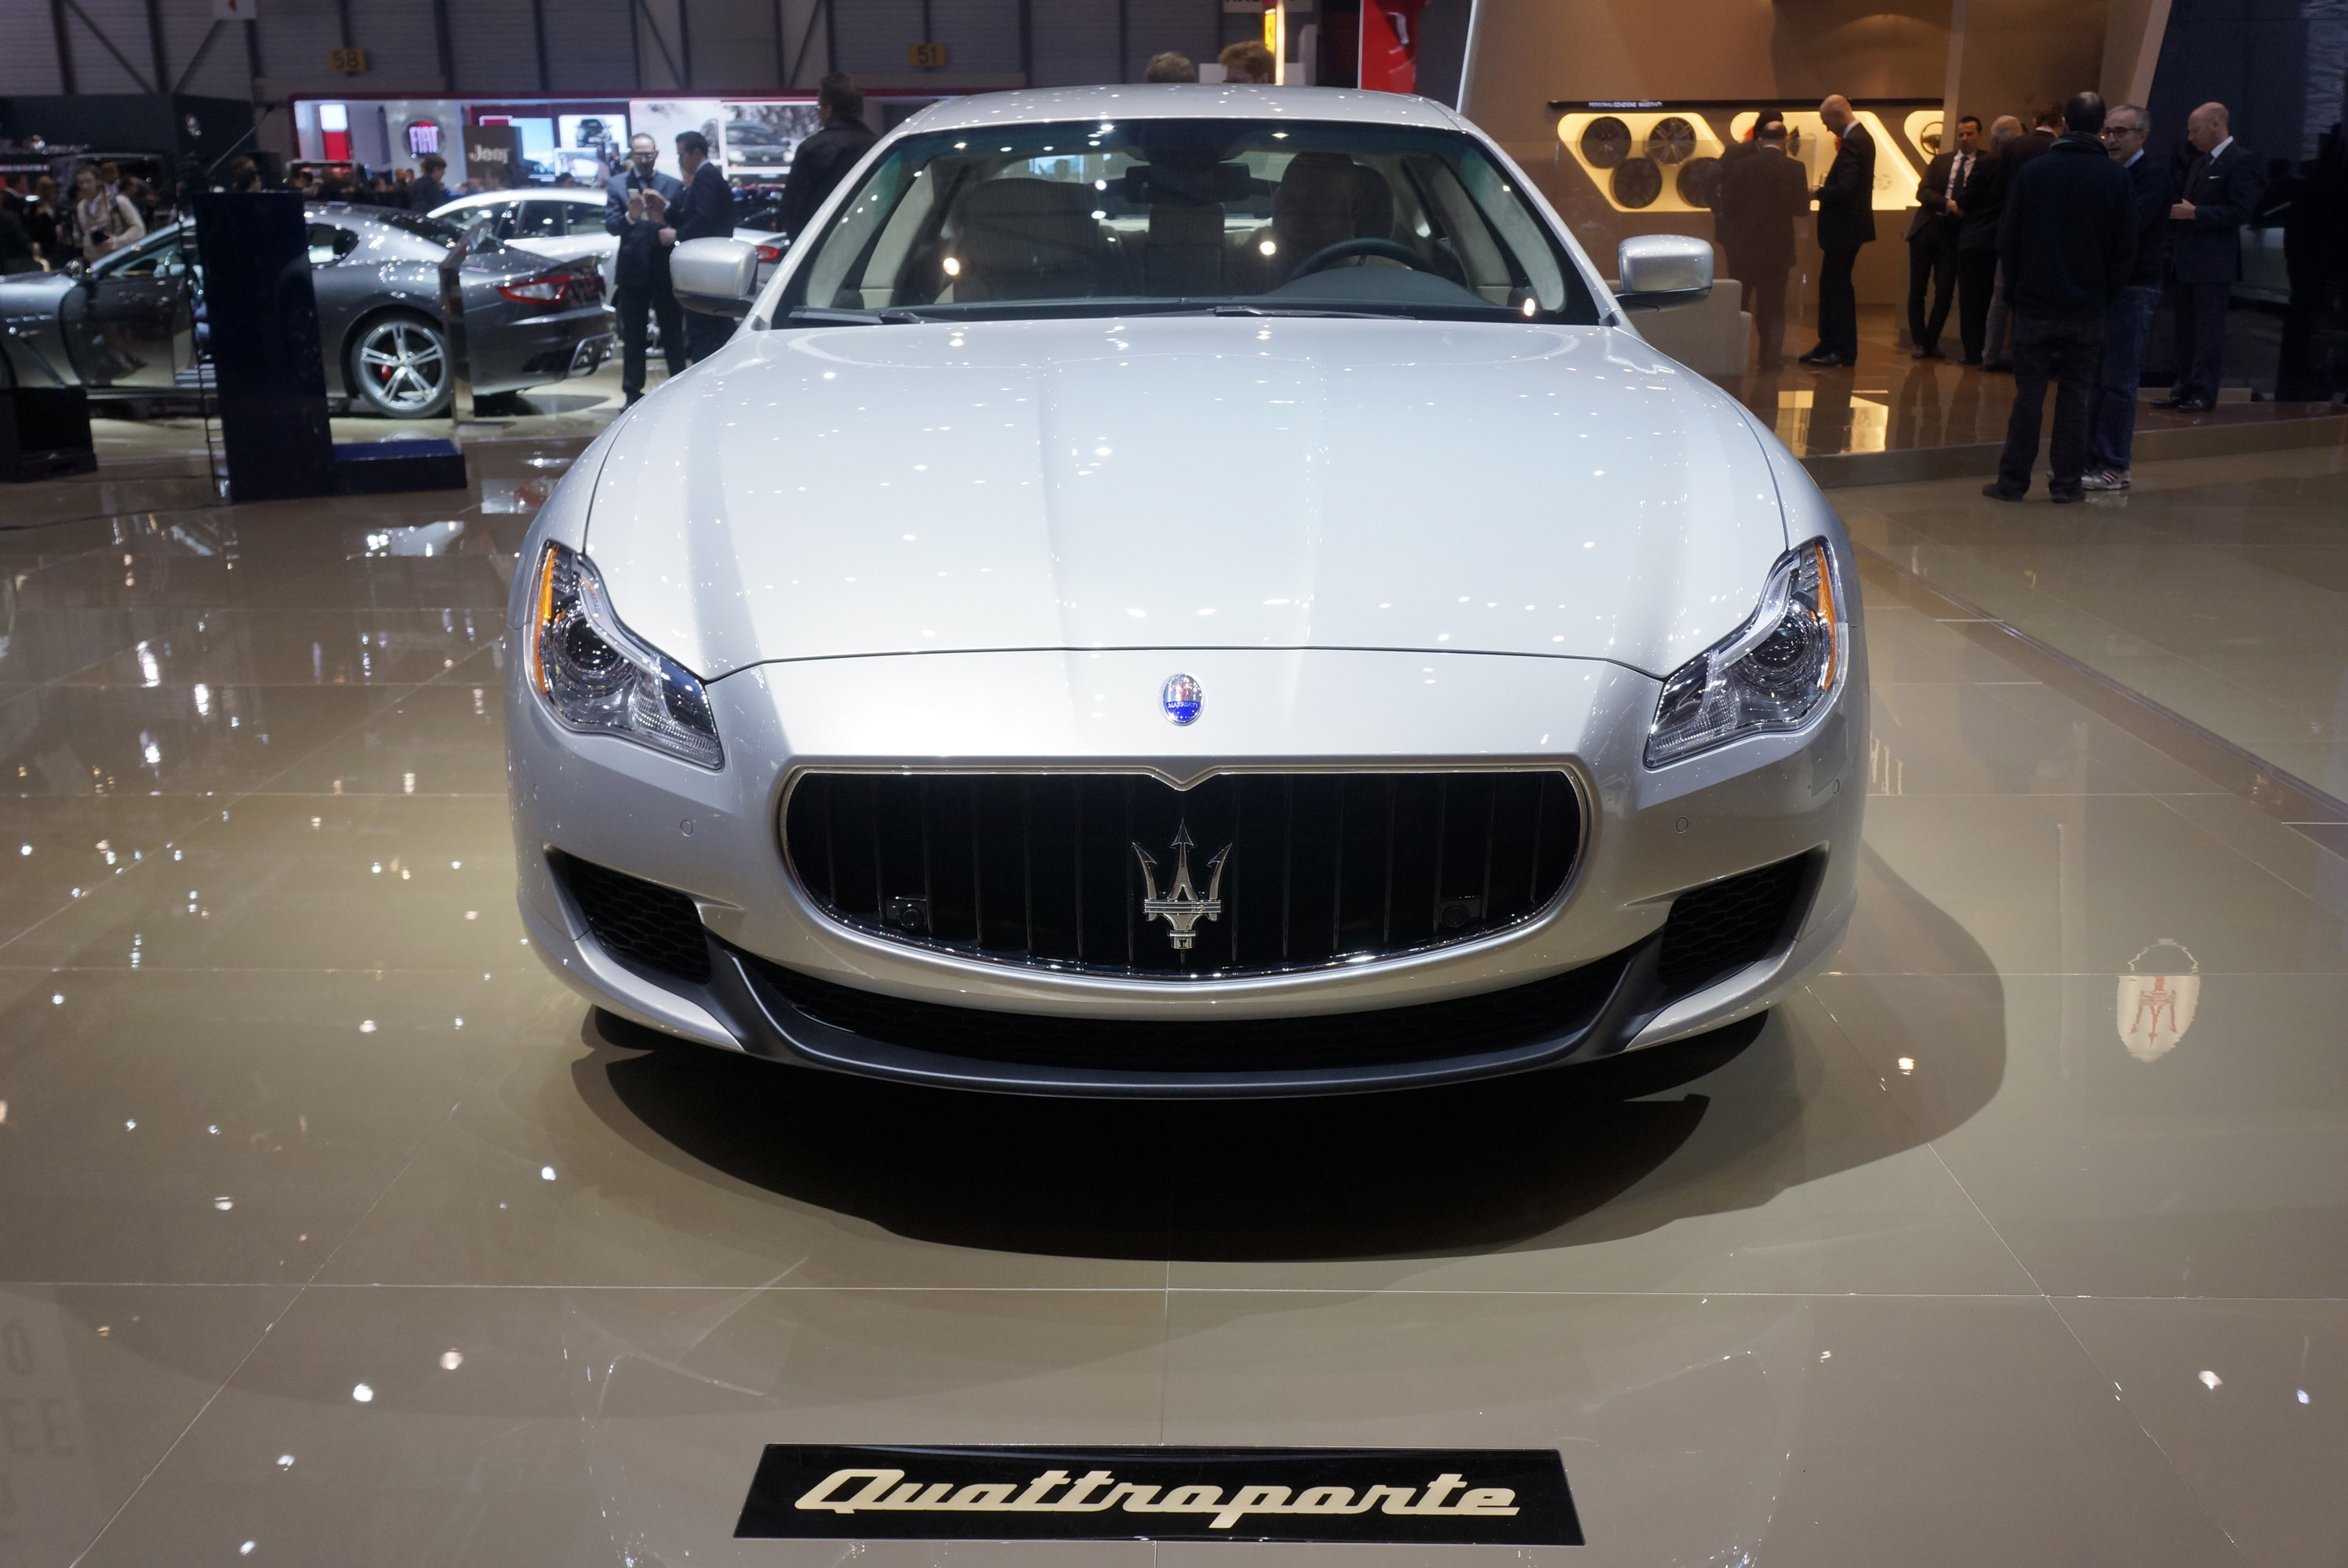 Maserati Quattroporte Geneva